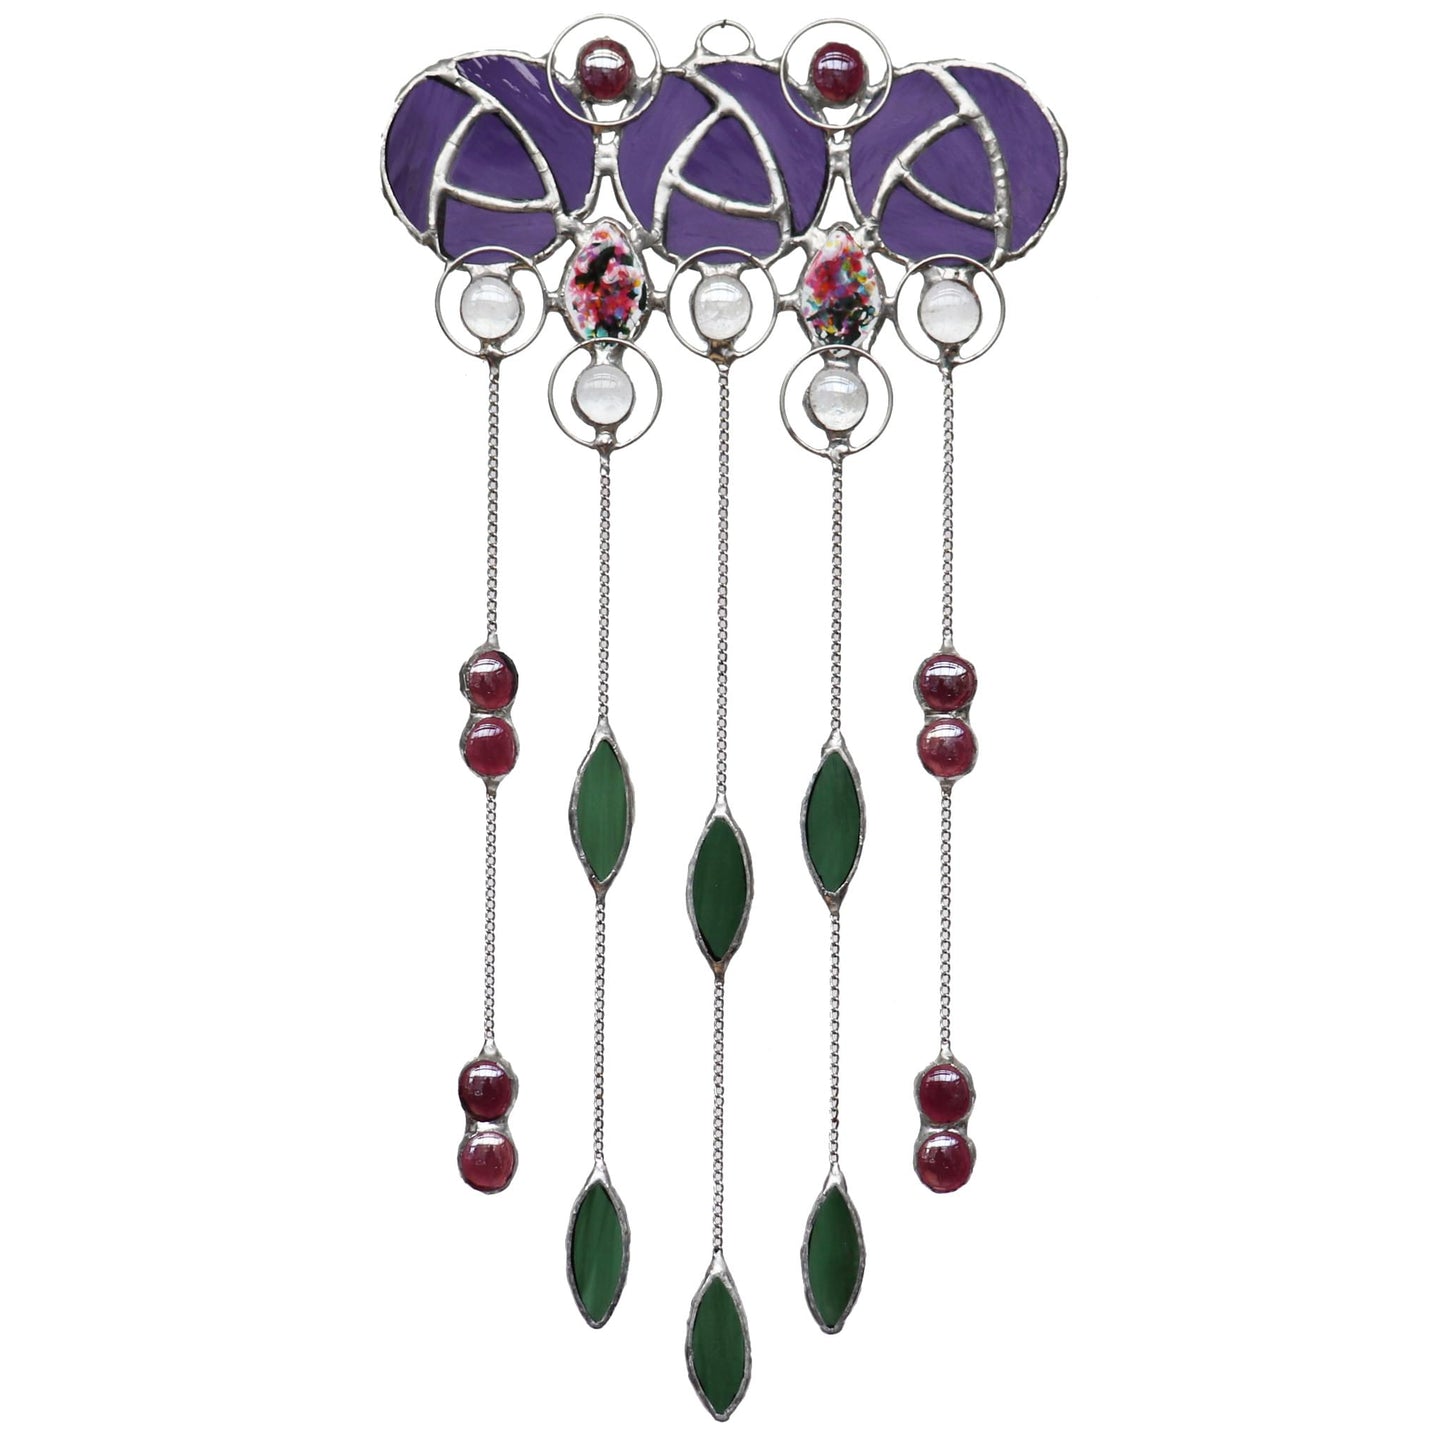 Art Nouveau Design 4 Purple Stained Glass Sun Catcher